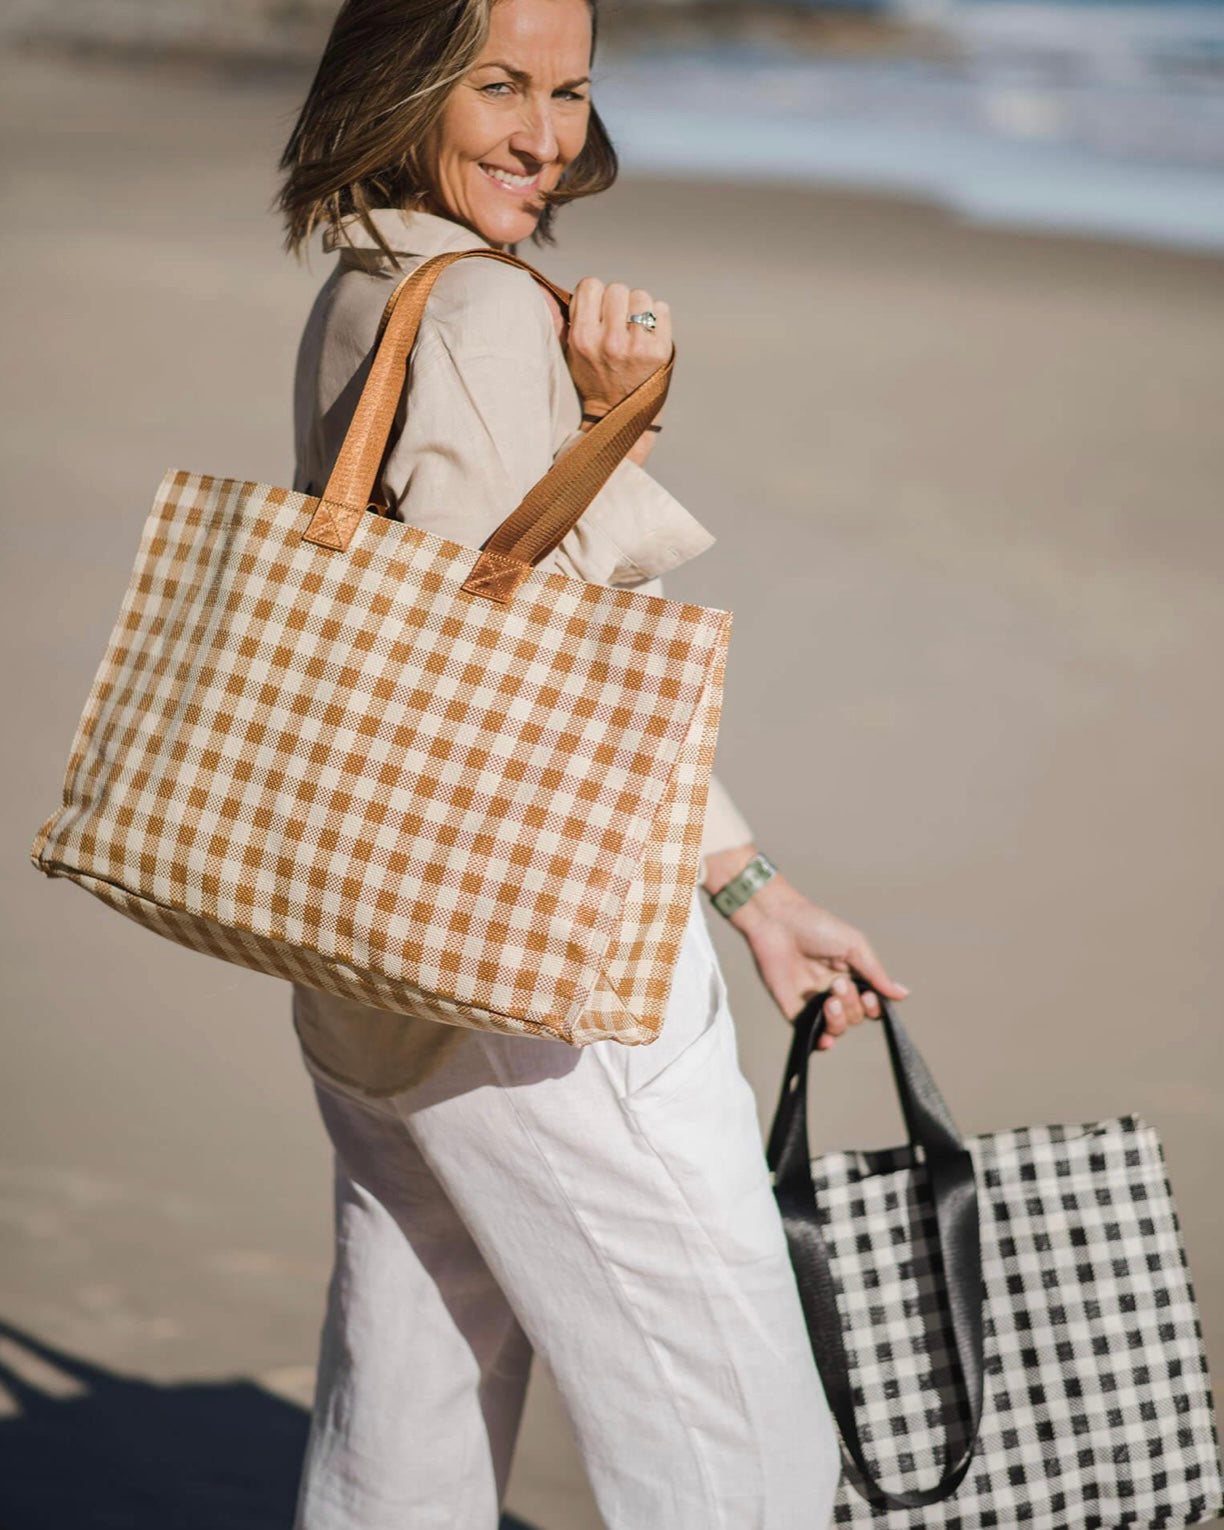 Simpson Beach/Carry All/Shopper Bag (Black/Cream), louenhide, beach bag, tote bag, shopper bag